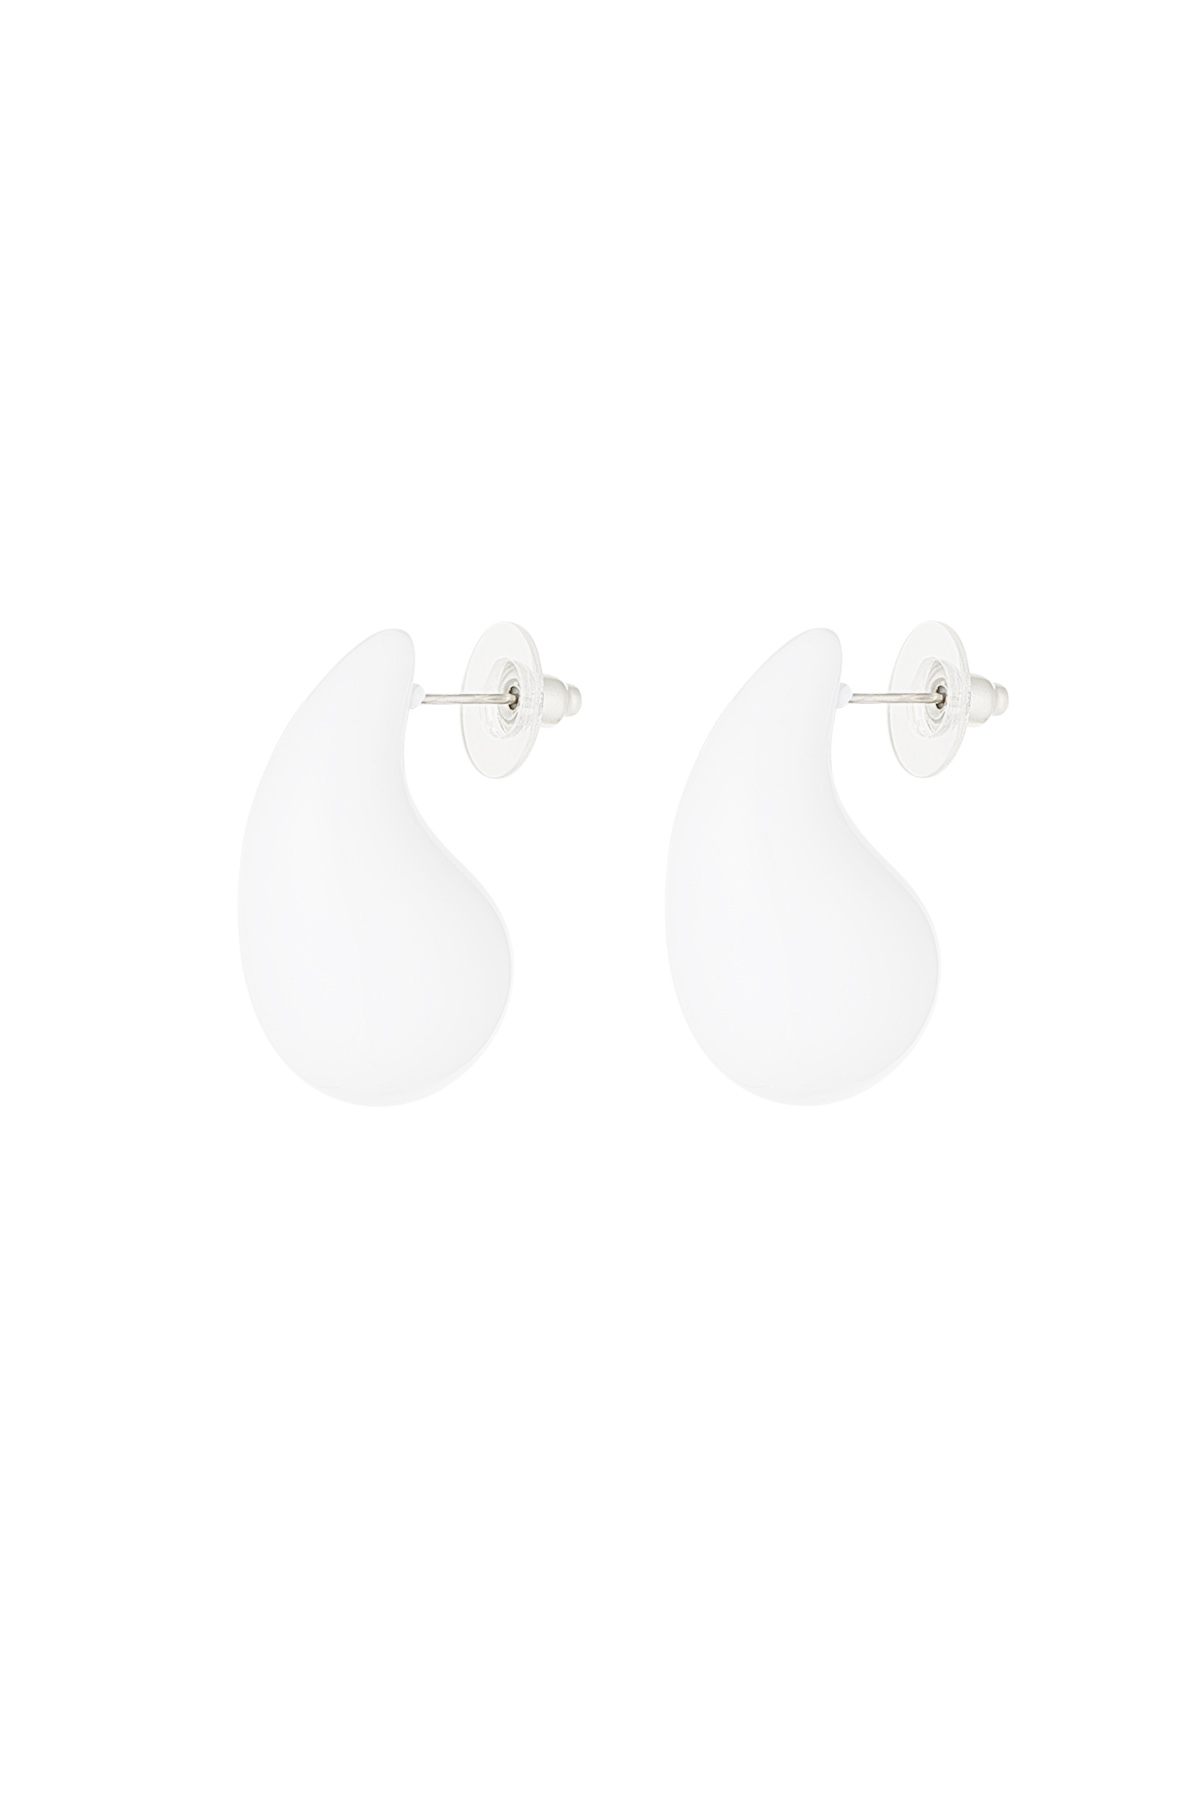 Stylish earrings-white h5 